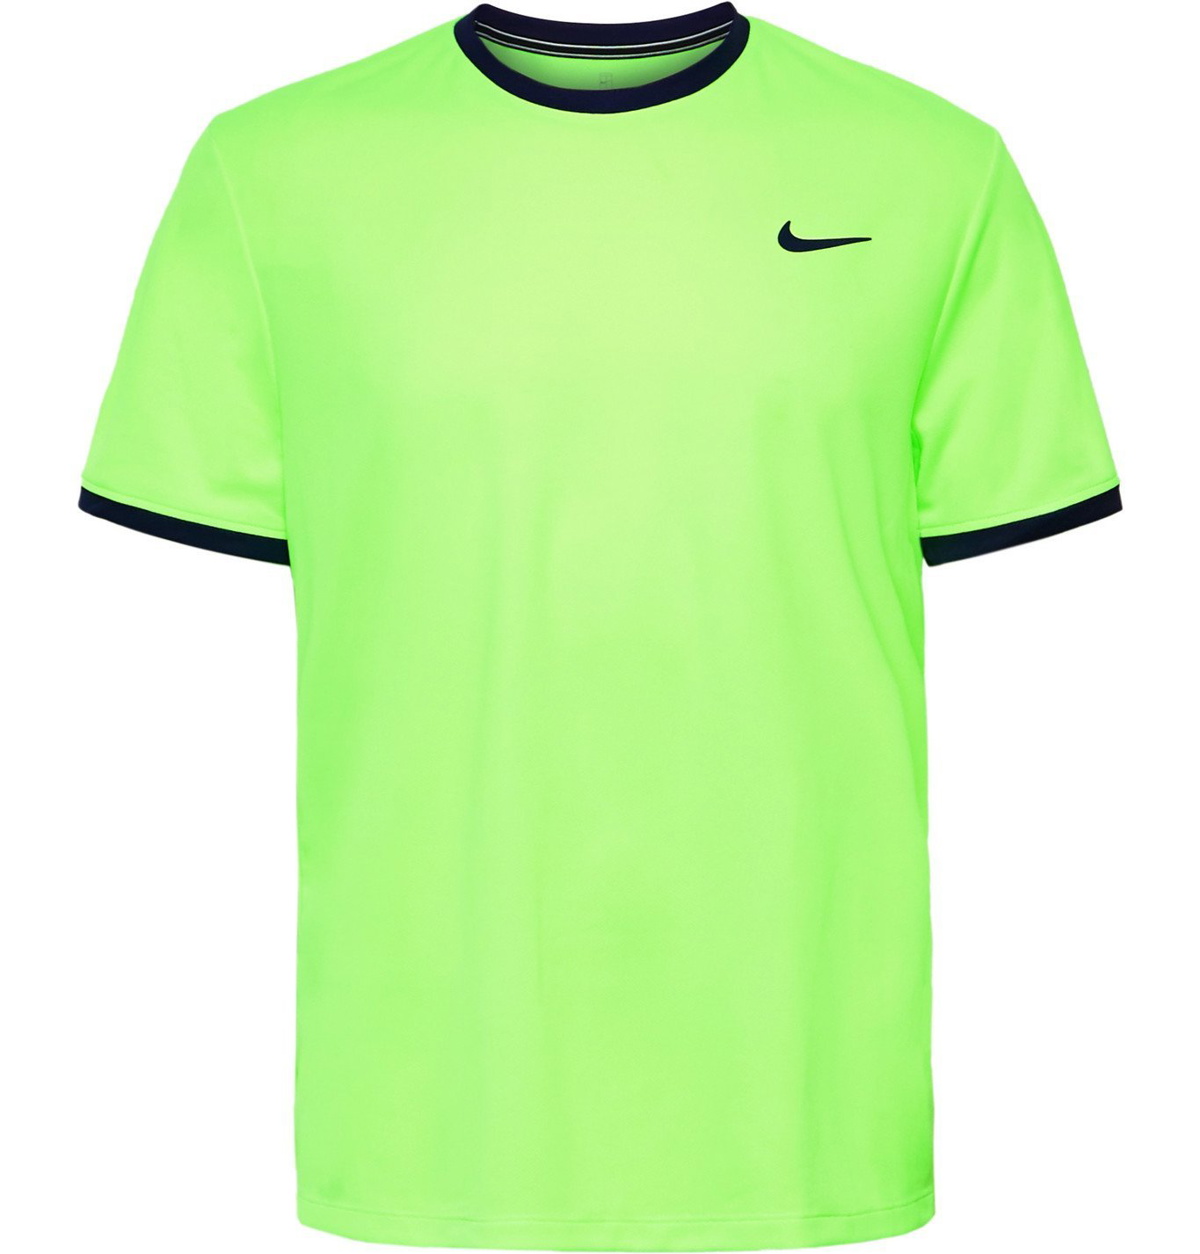 Nike Tennis - Two-Tone NikeCourt T-Shirt - Nike Tennis